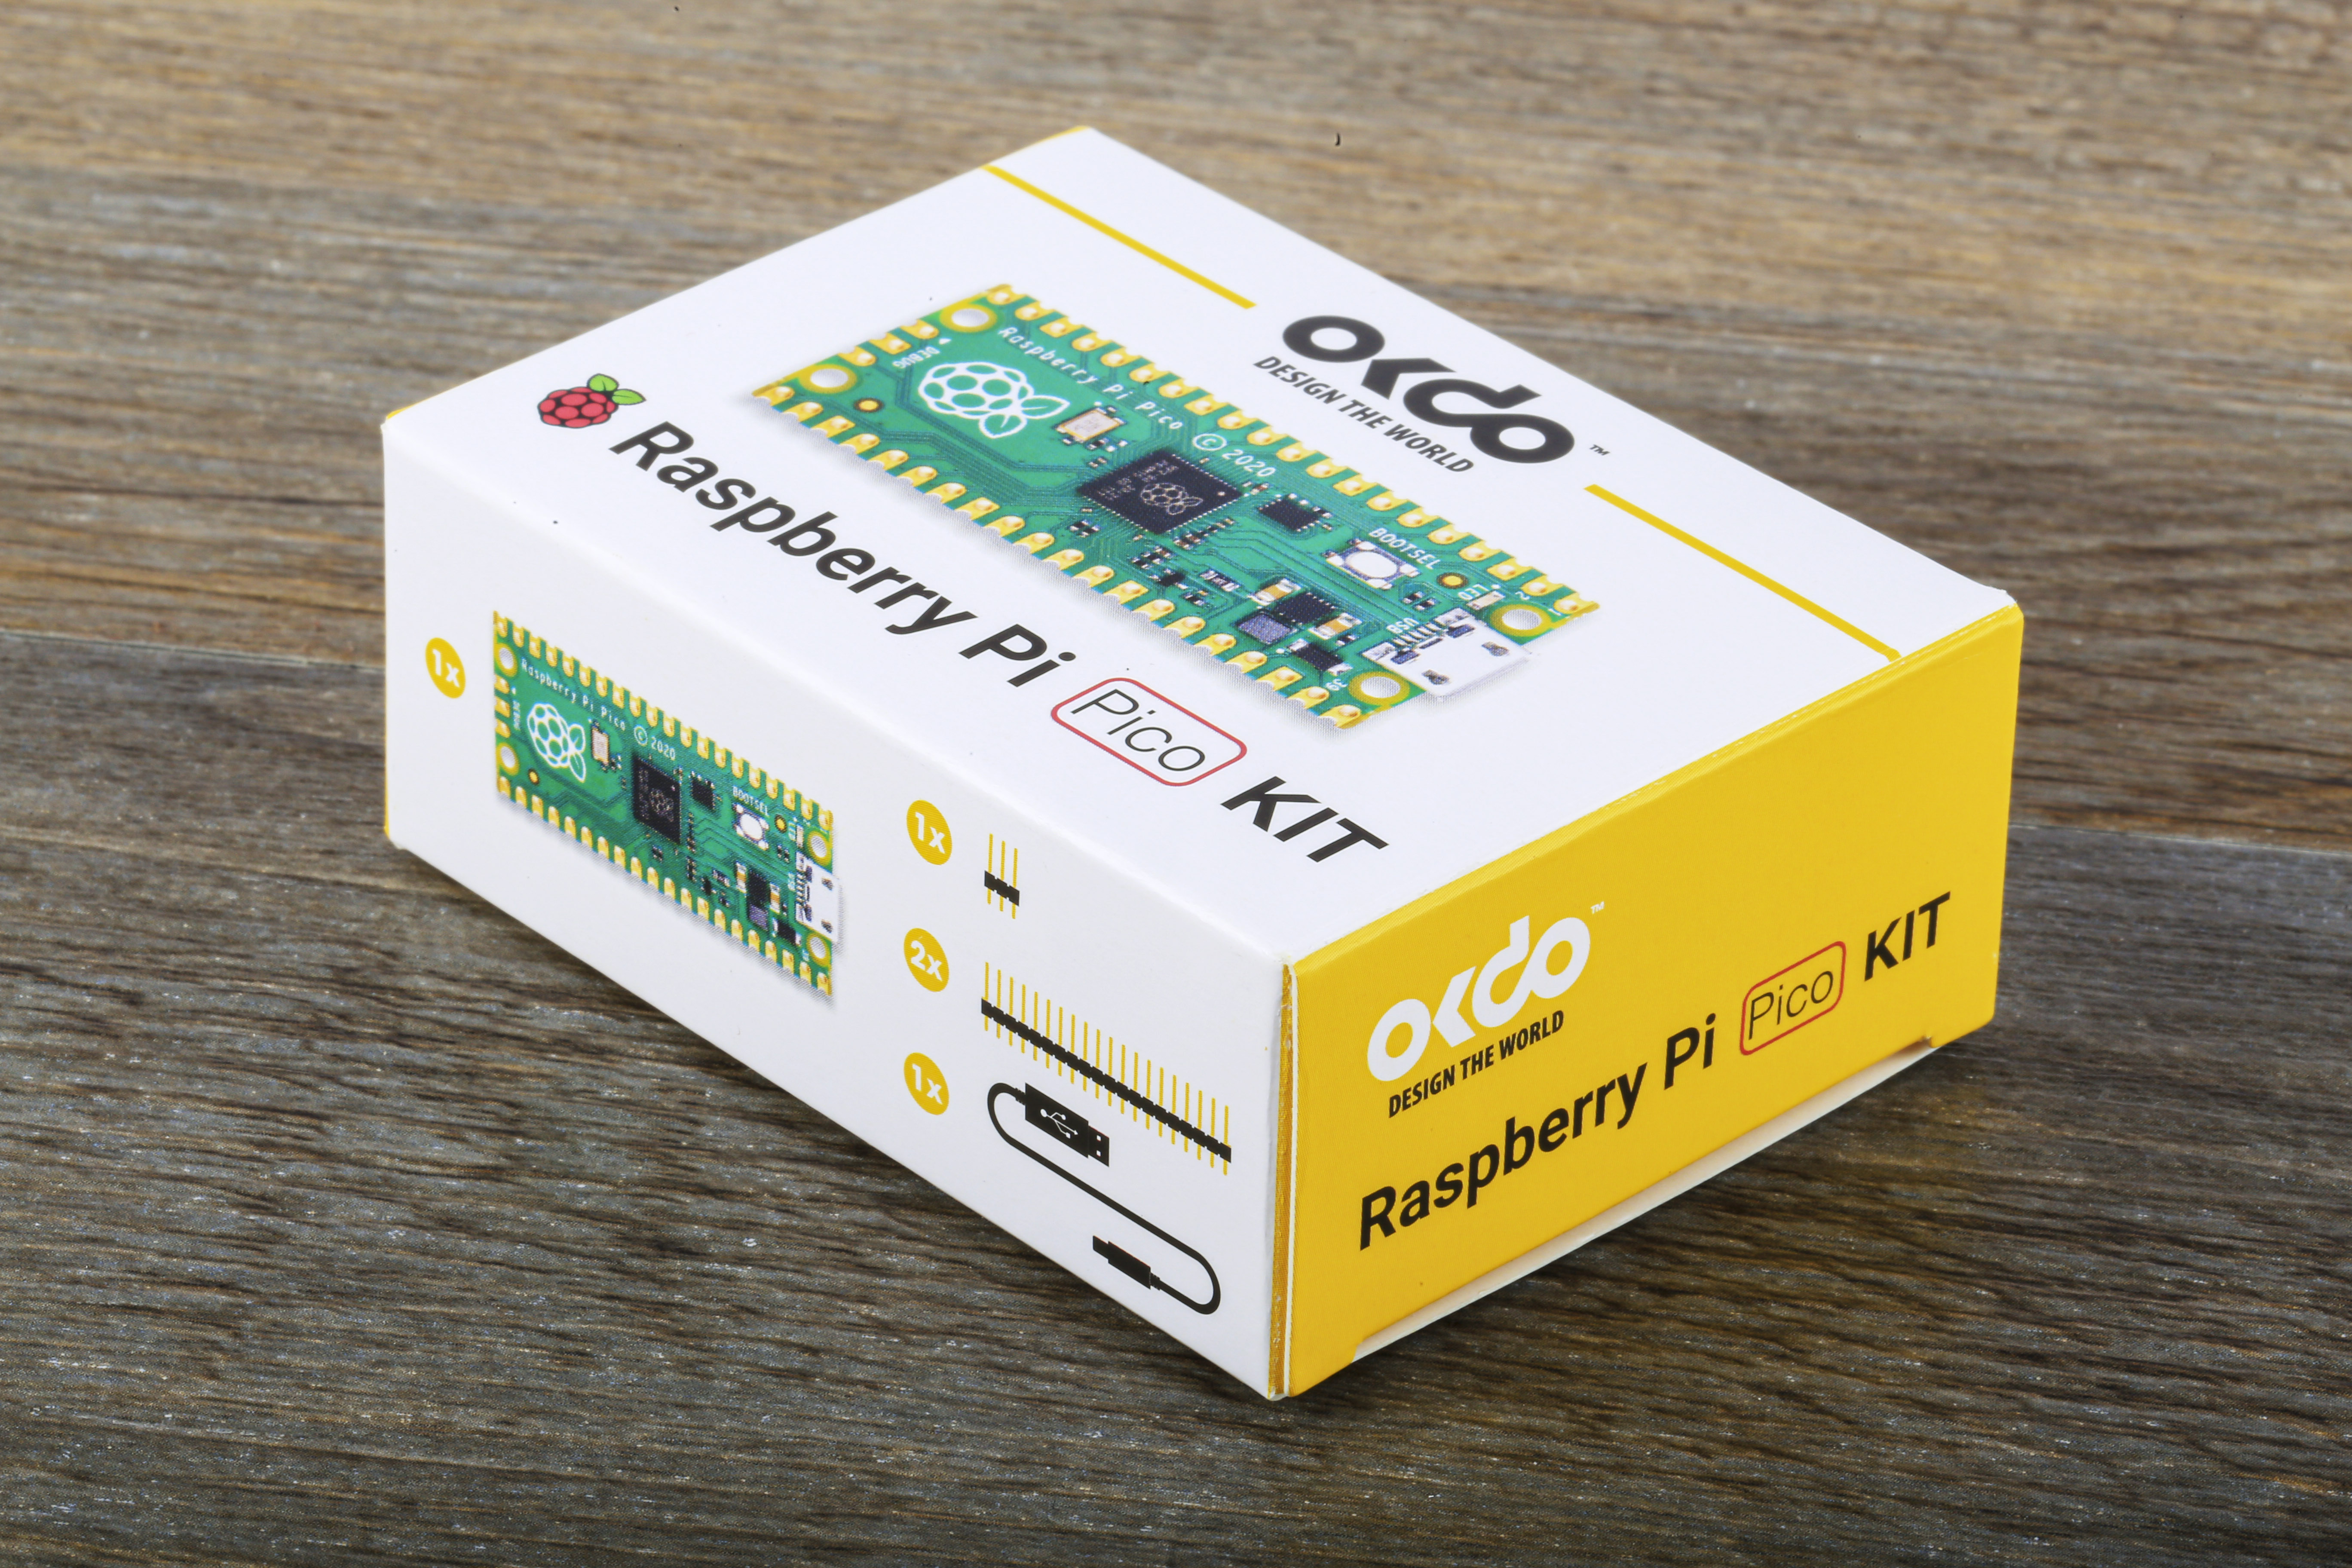 OKdo Raspberry Pi Pico Kit